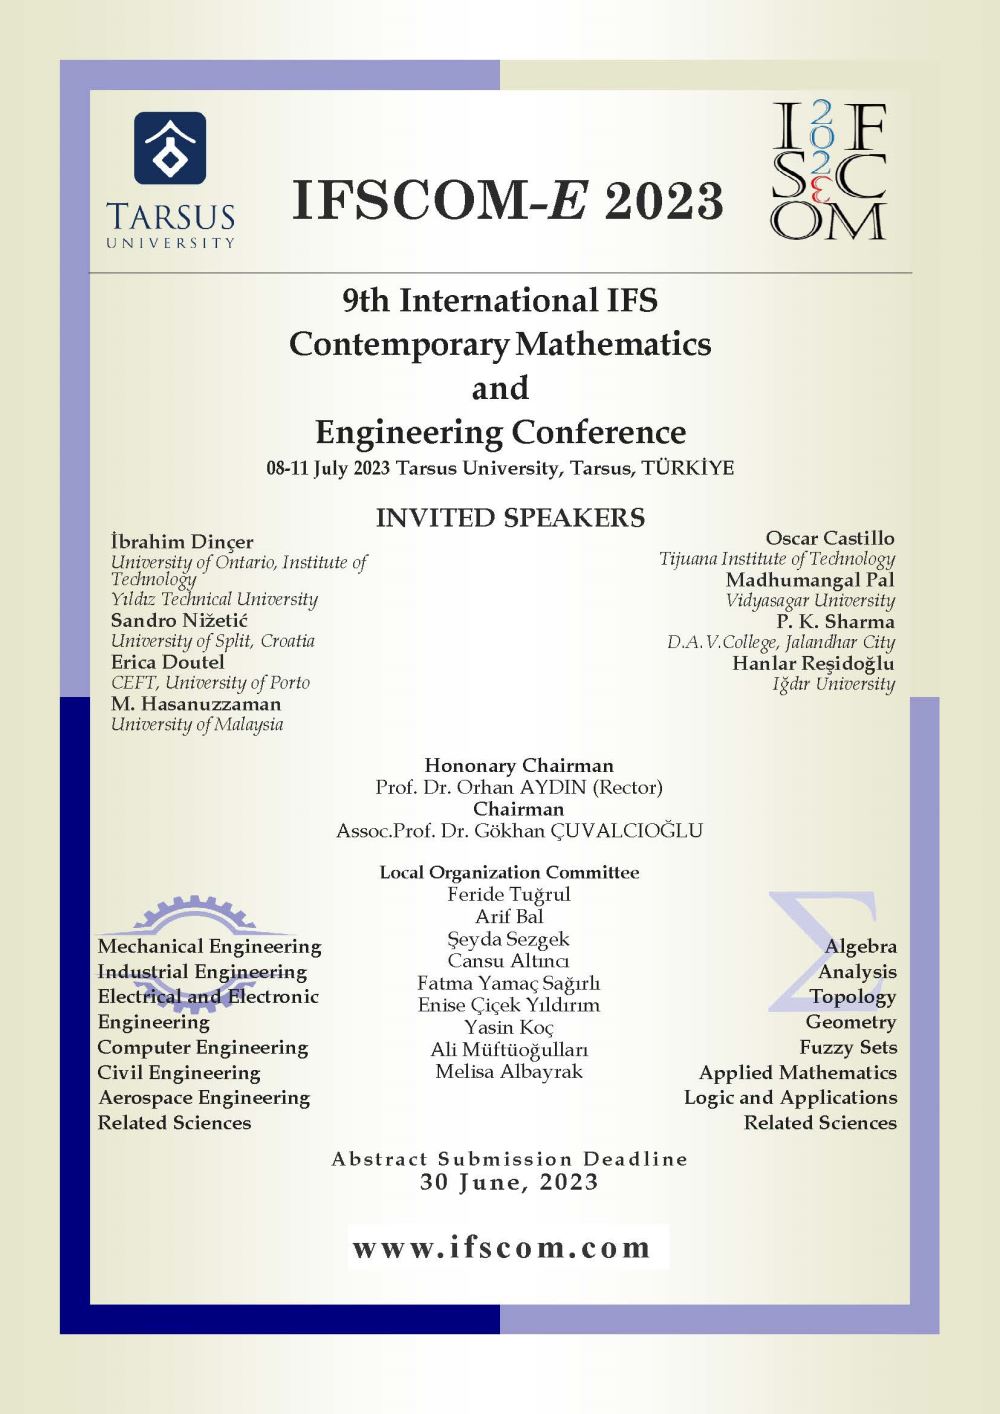 IFSCOM-E 2023 - 9th International IFS Contemporary Mathematics and Engineering Conference